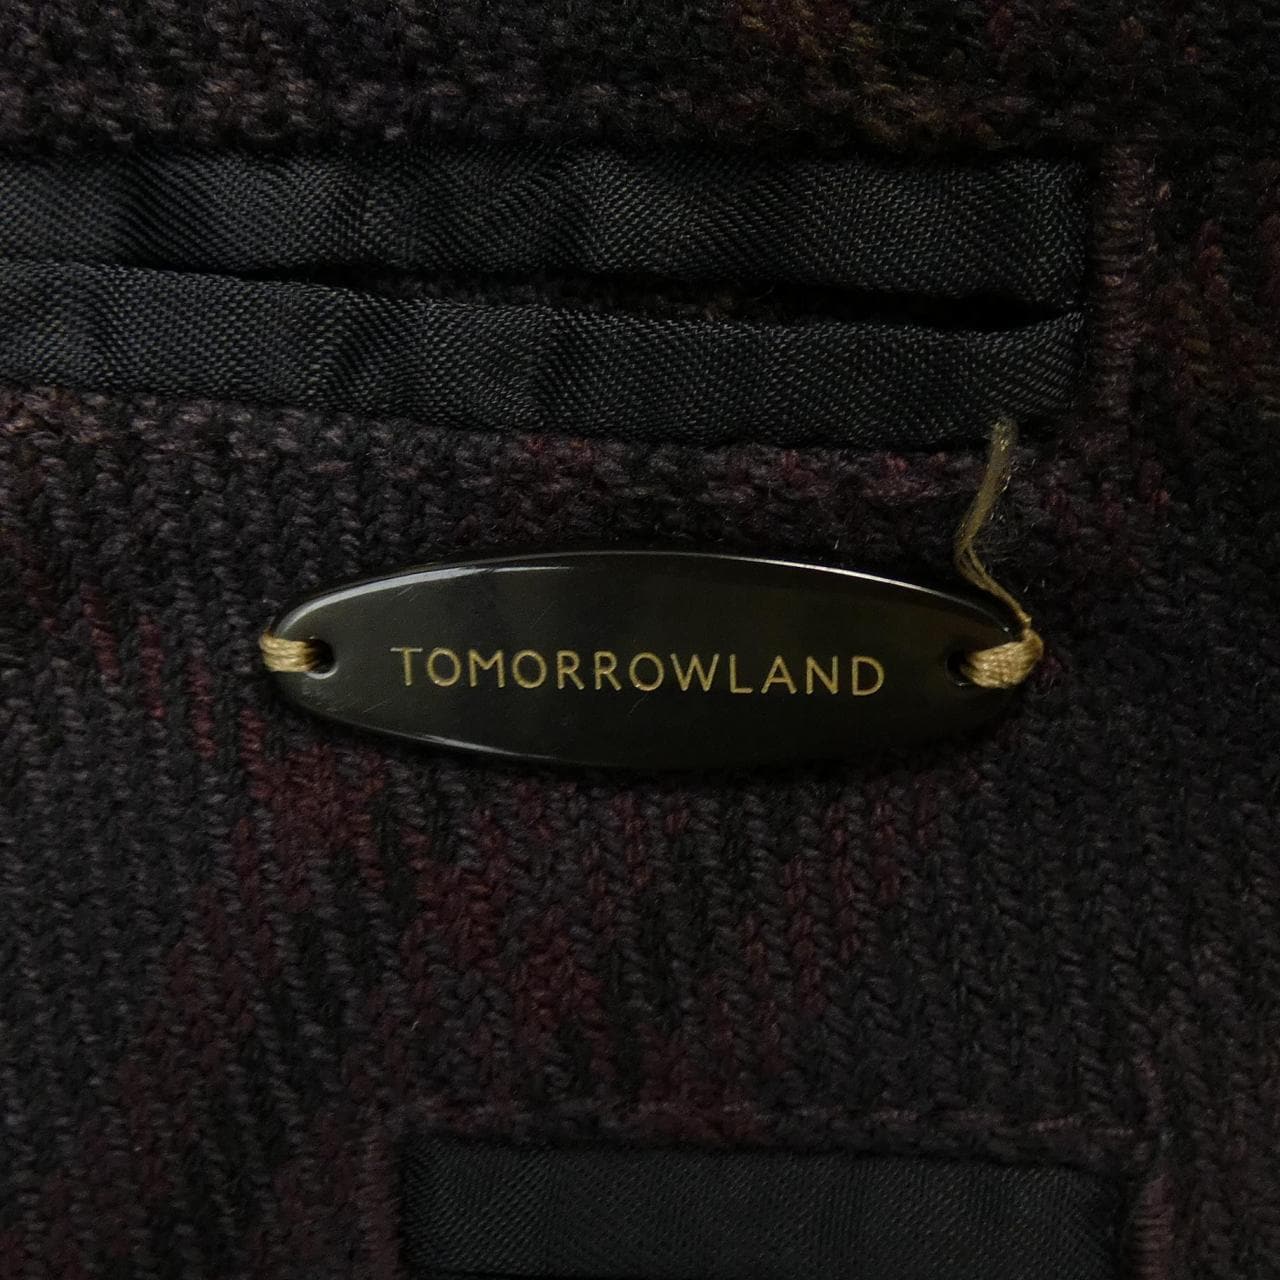 Tomorrowland TOMORROW LAND jacket